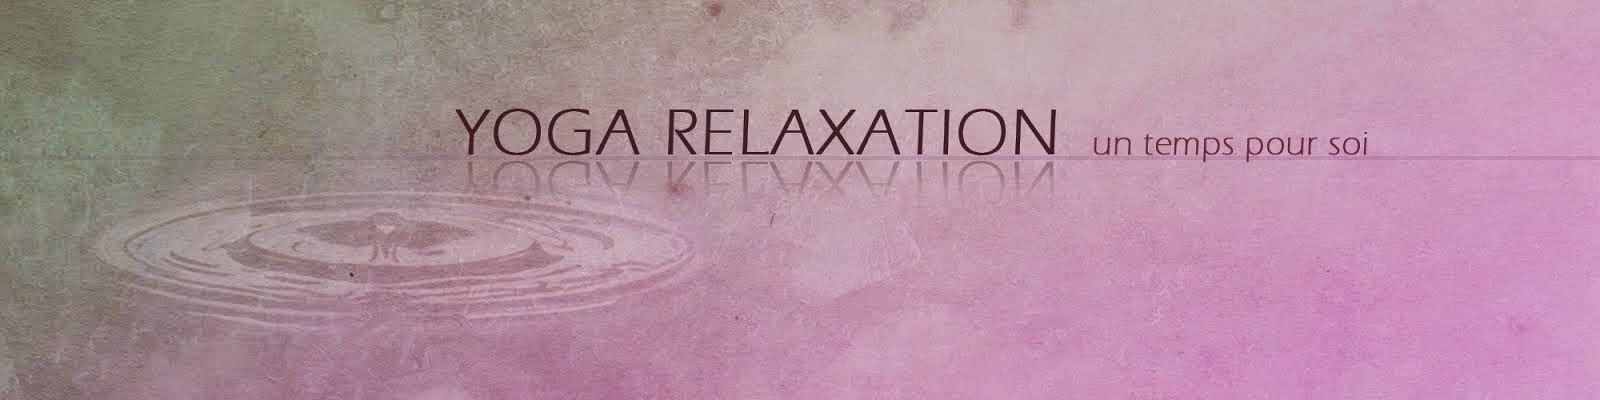                                                   yoga relaxation Aude /Myriam Cabra